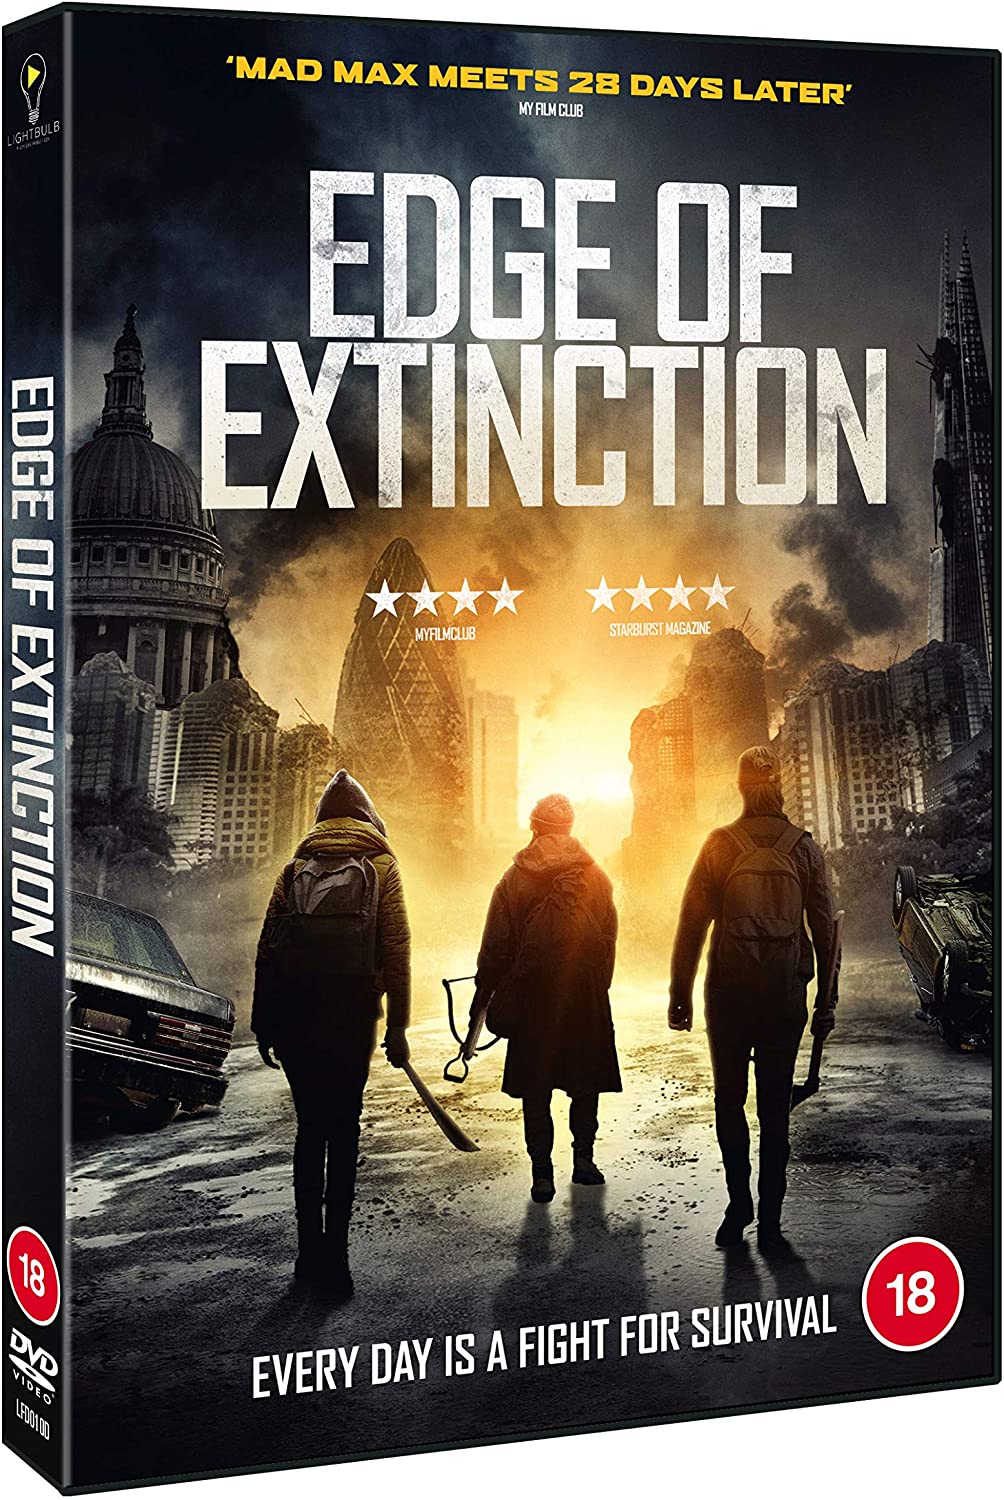 Edge of Extinction - Action [DVD]